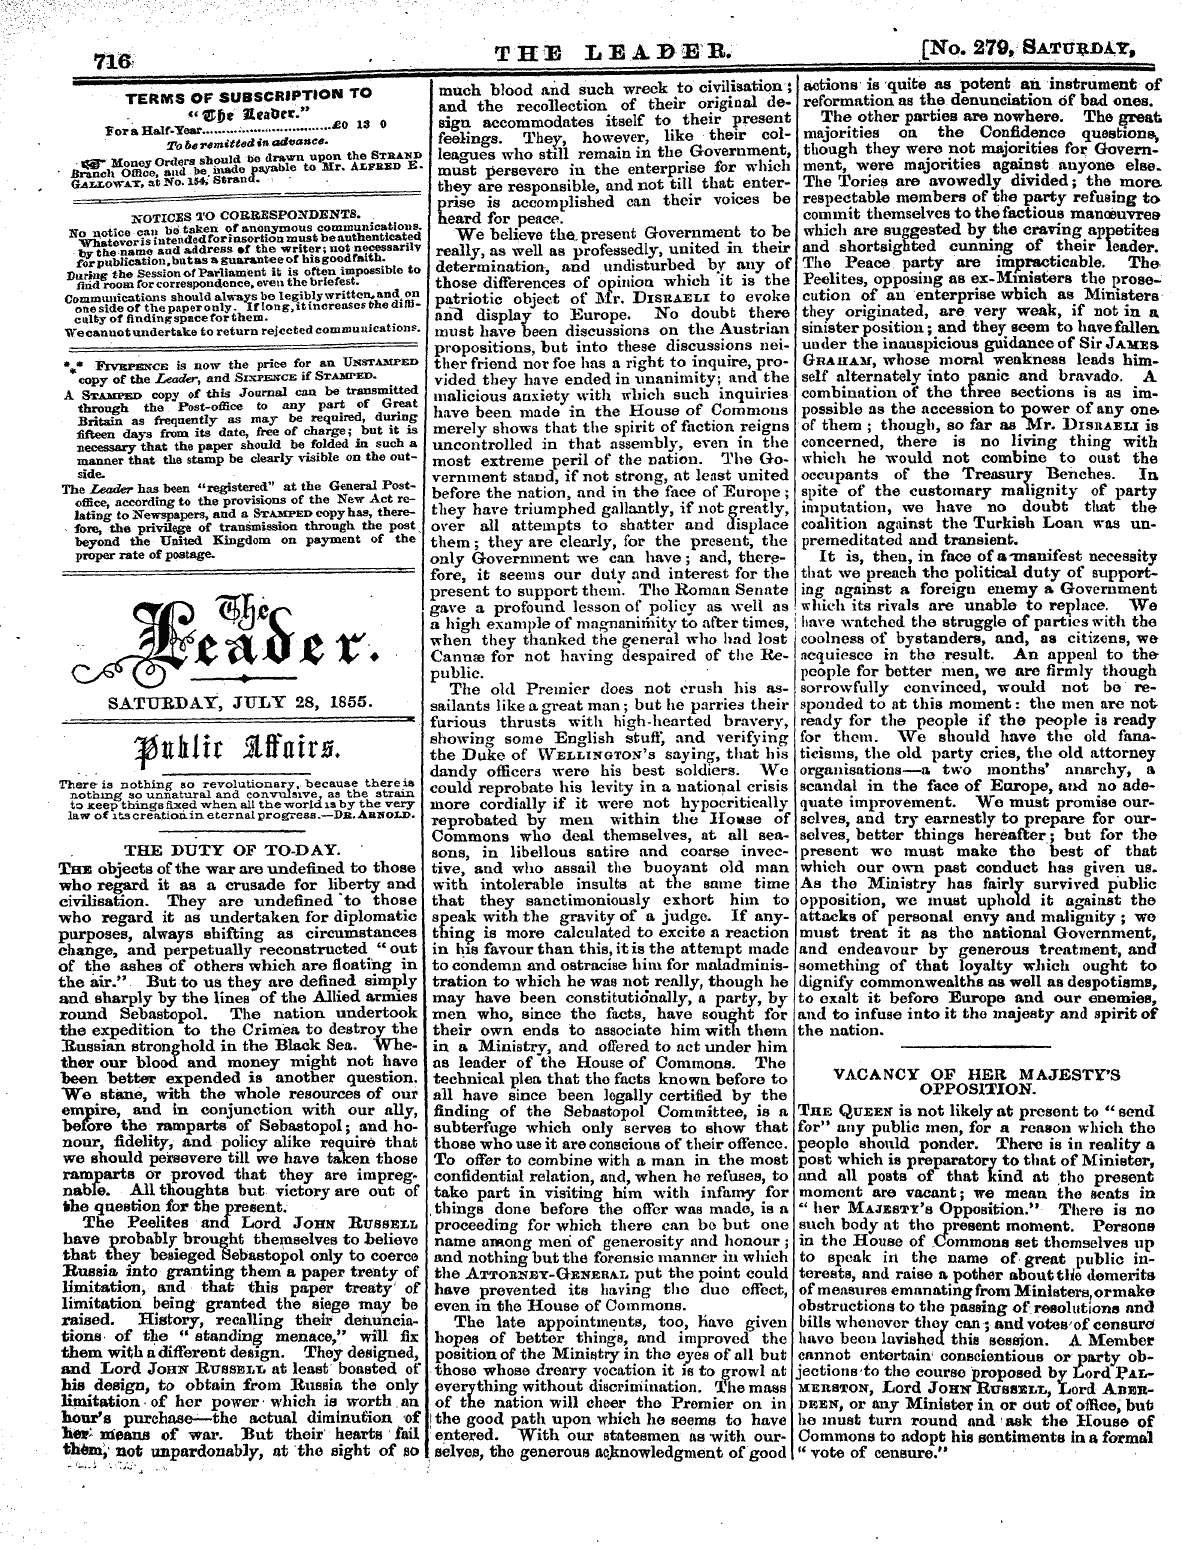 Leader (1850-1860): jS F Y, 2nd edition - Saturday, Jtot 28, 1855.